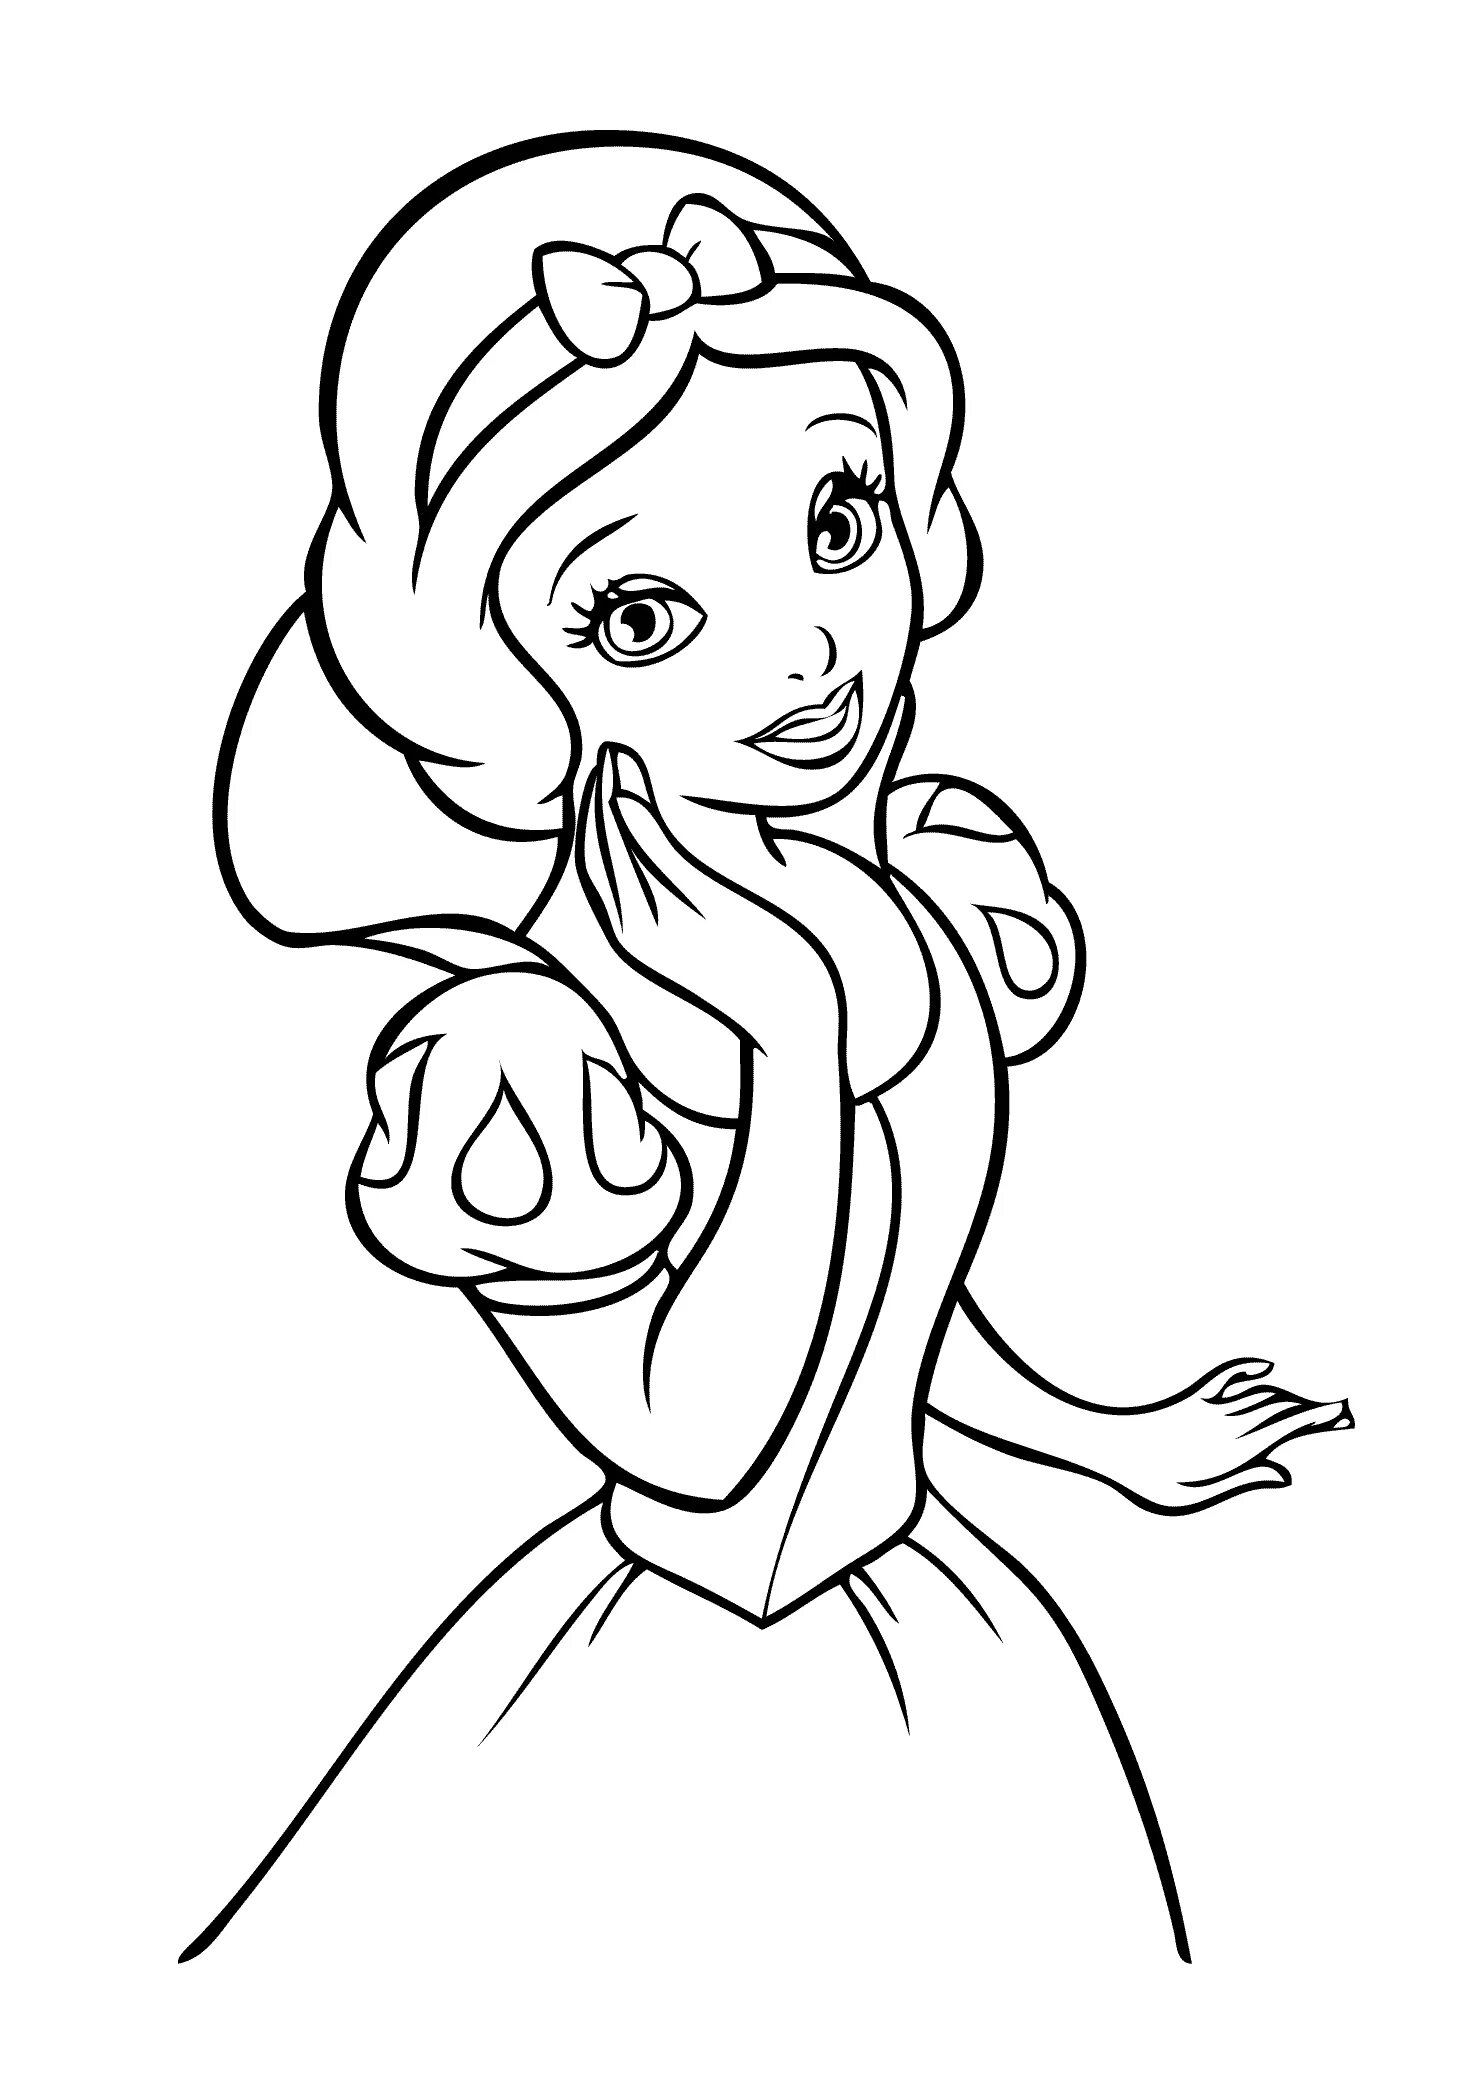 Large coloring drawing of a princess